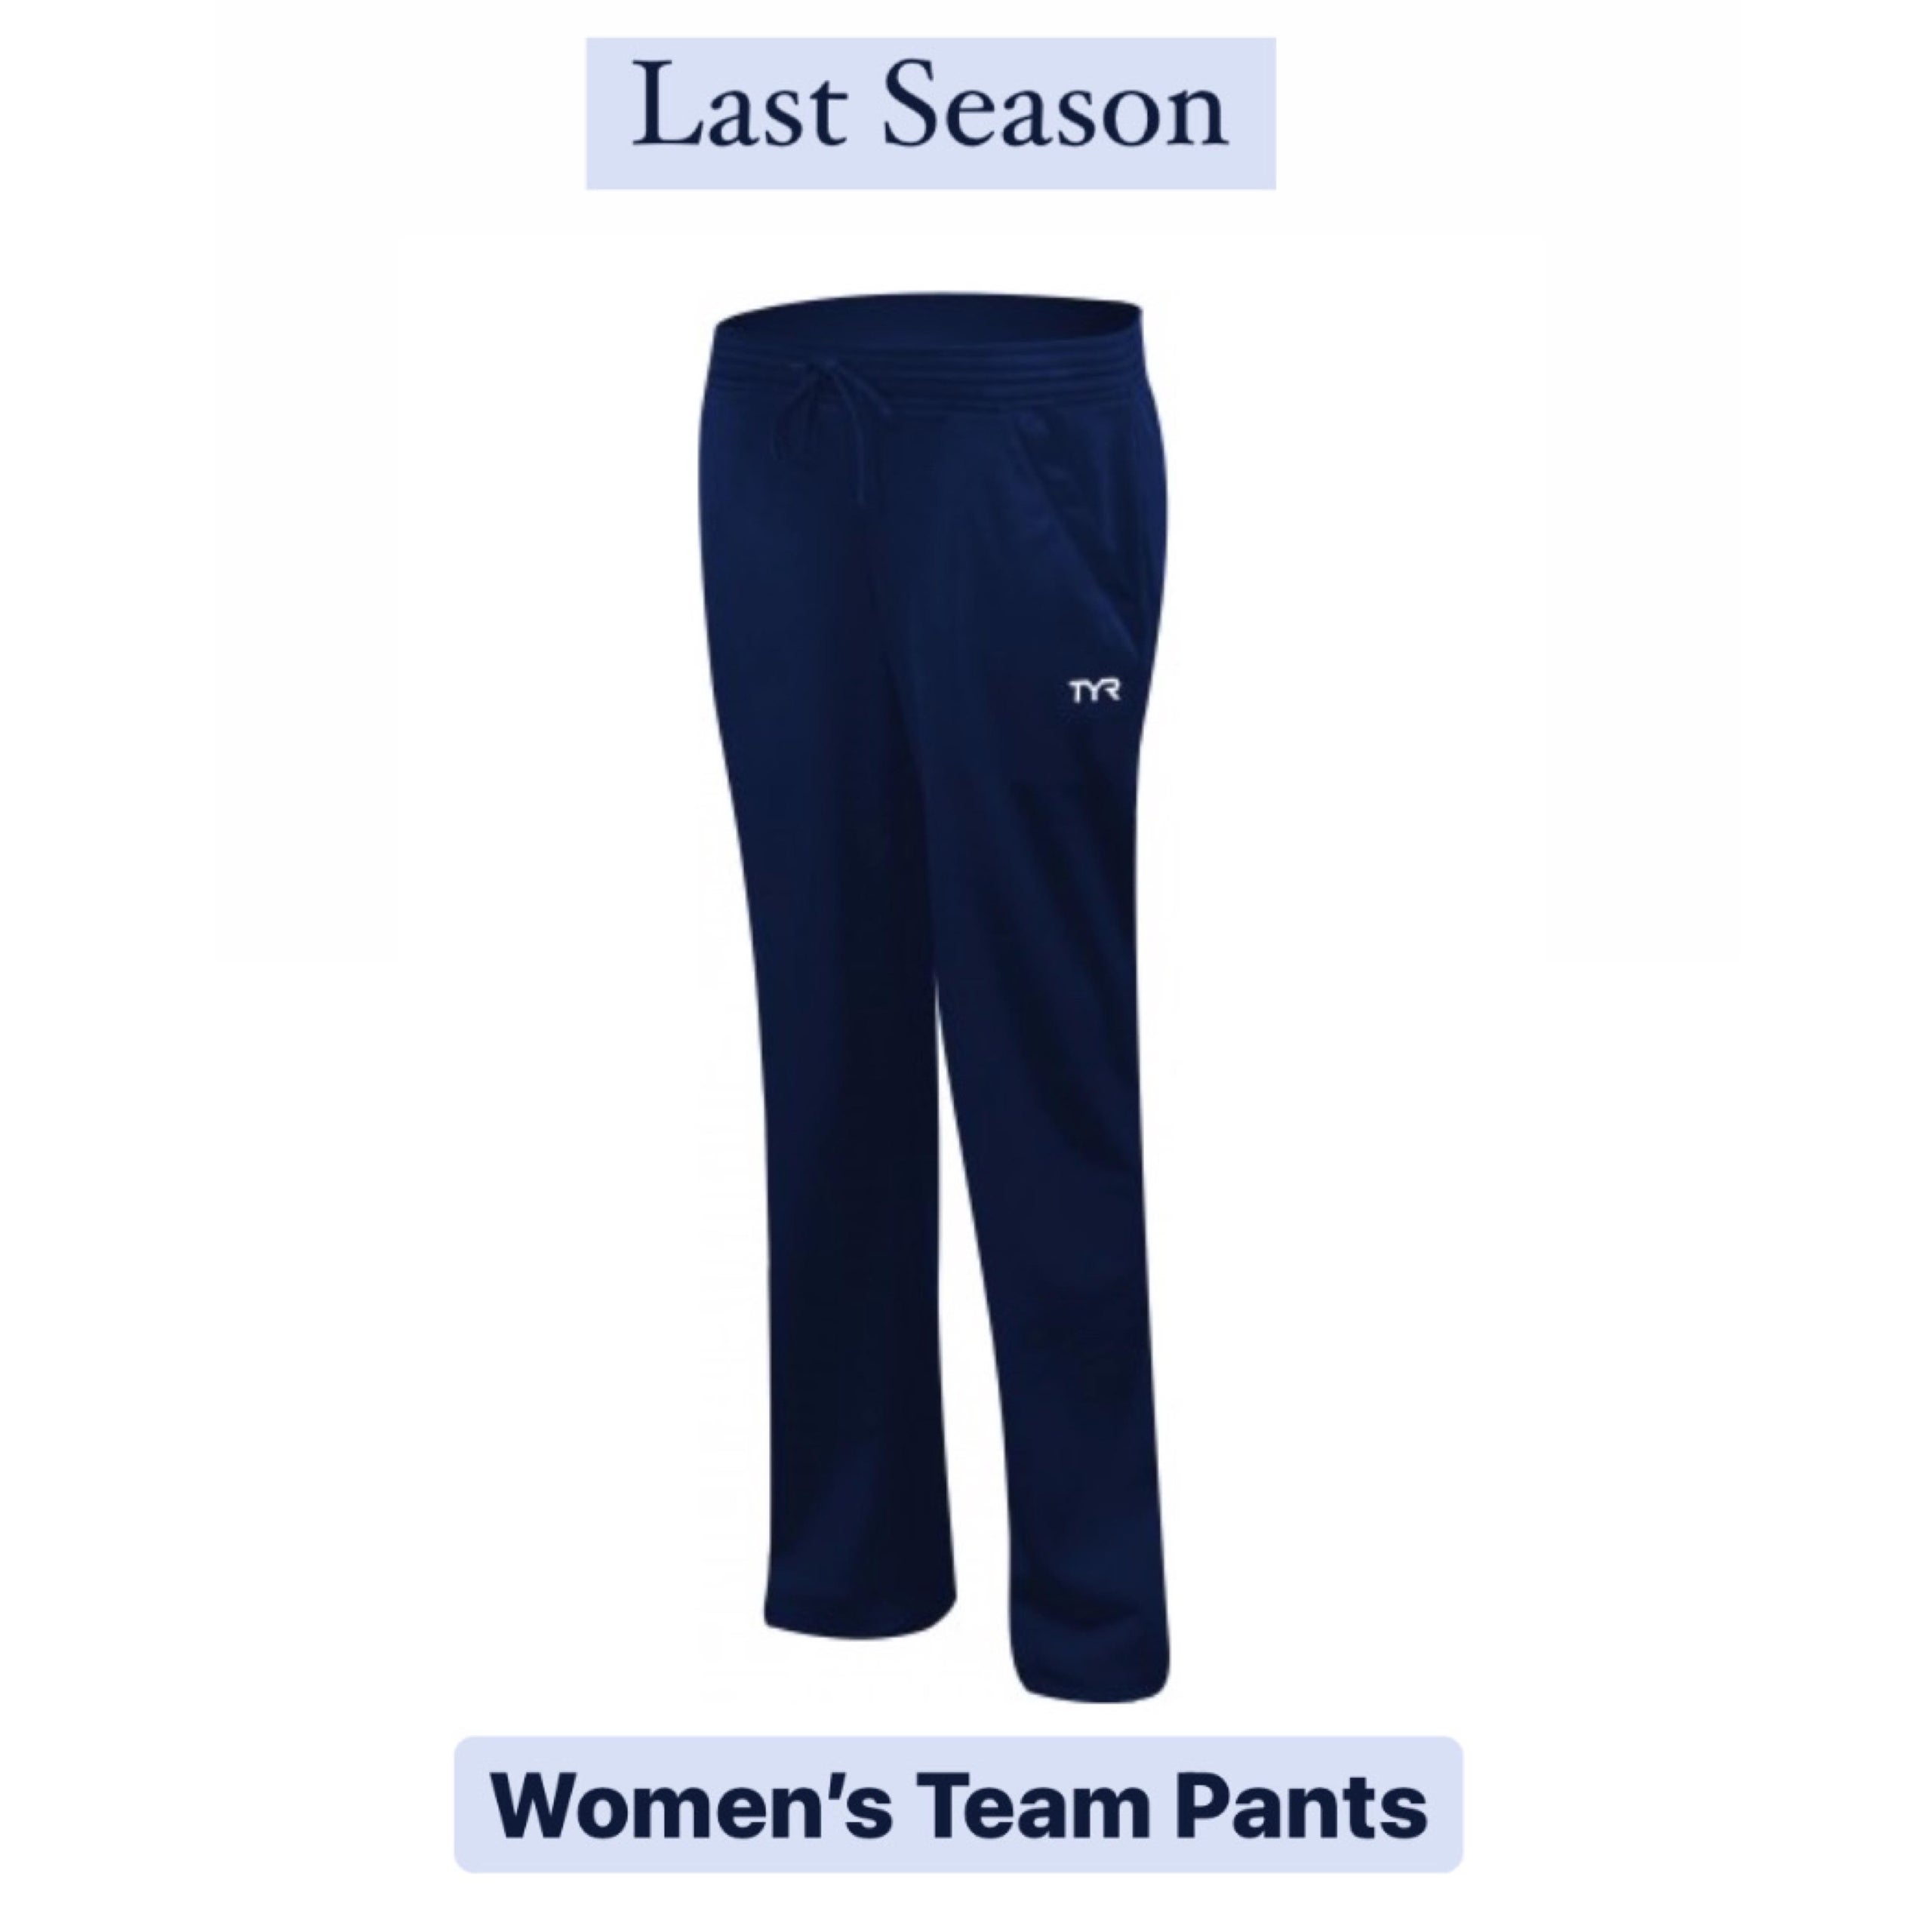 TYR Women's Team Pants (Last Season)